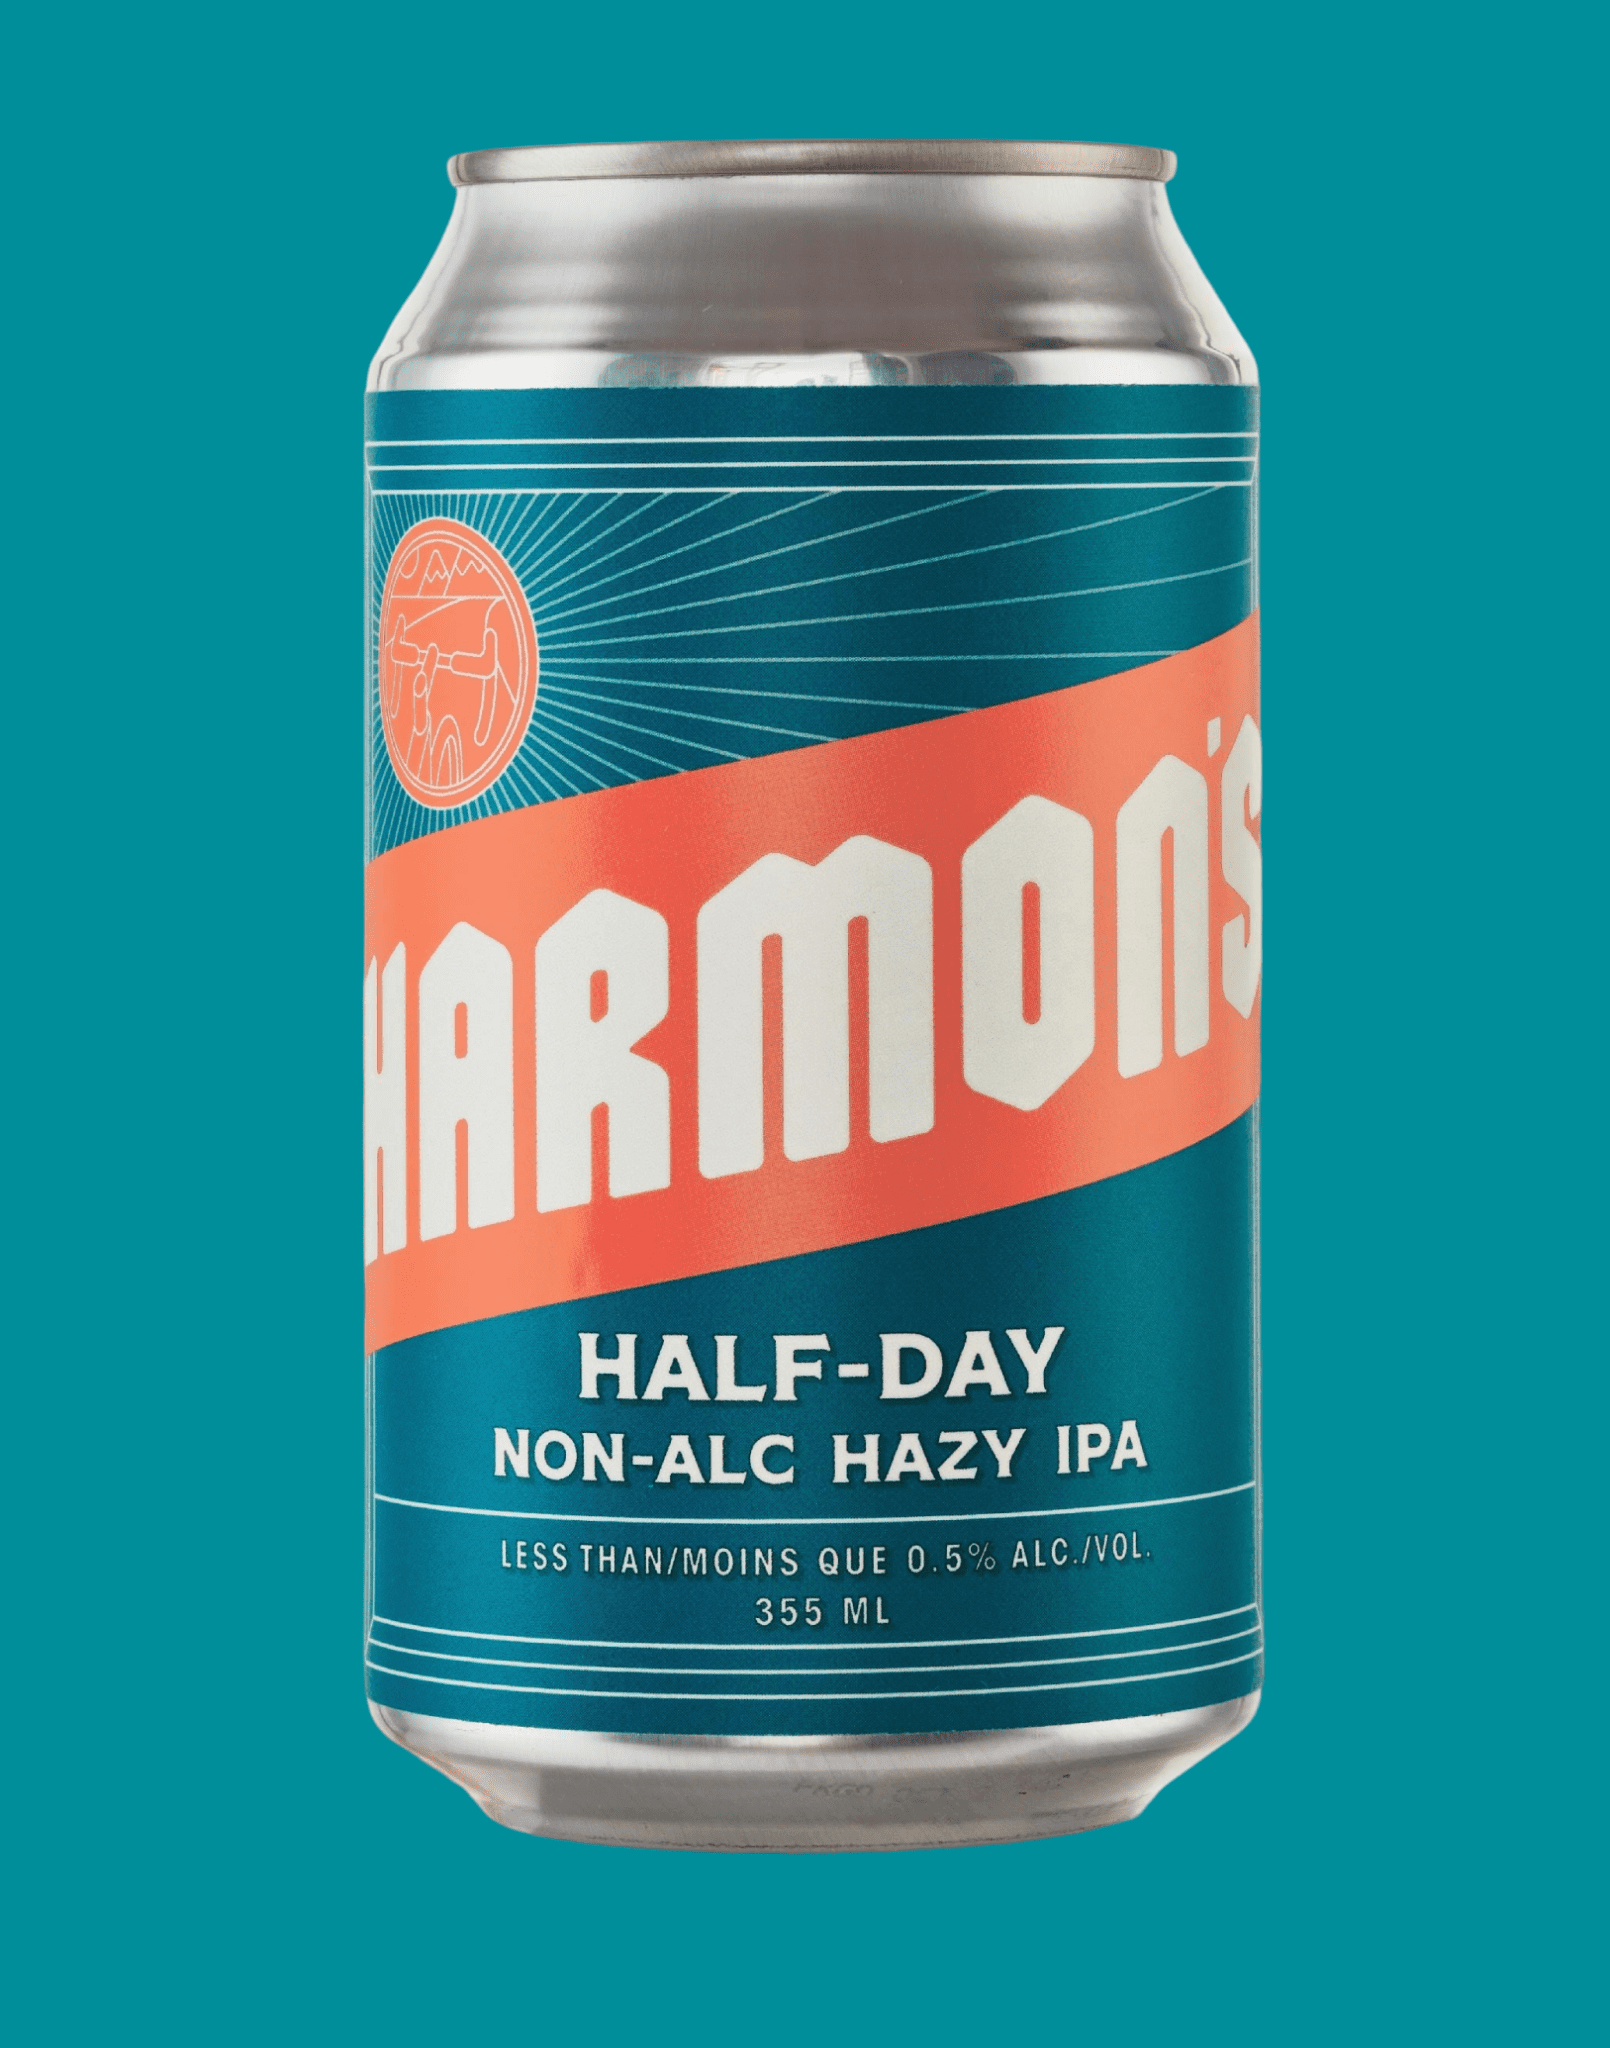 Harmon's Half-Day Non-Alc Hazy IPA